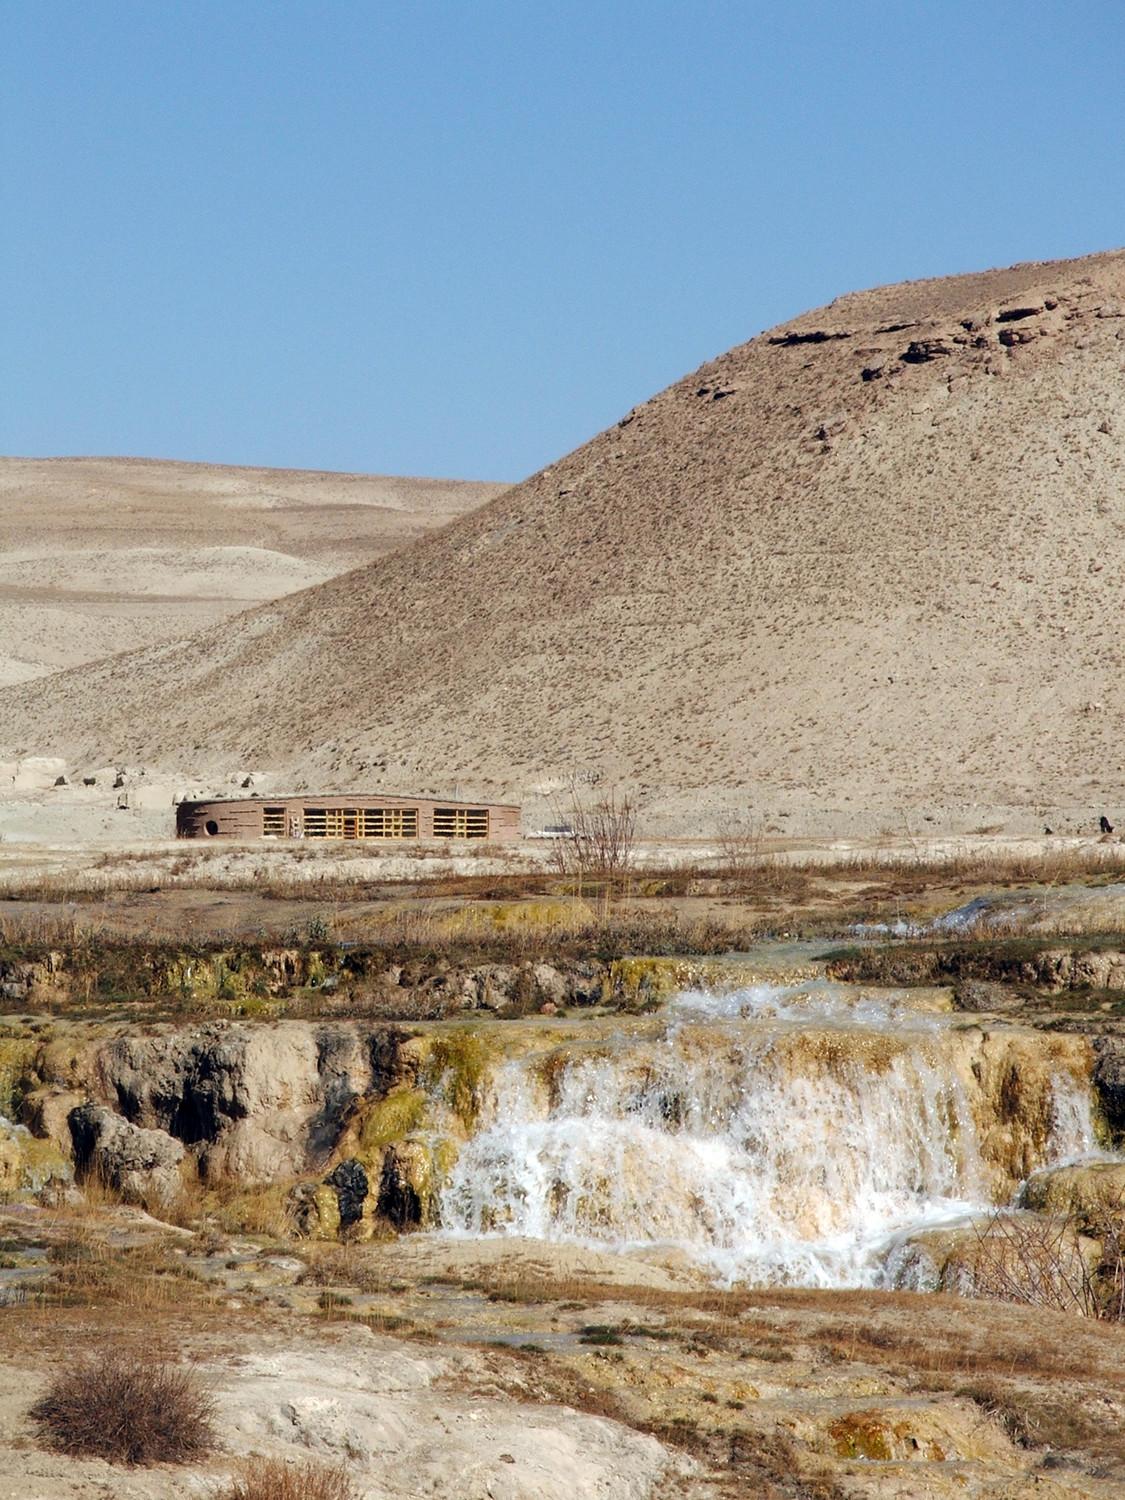 Visitor's centre, Band-i-Amir National Park